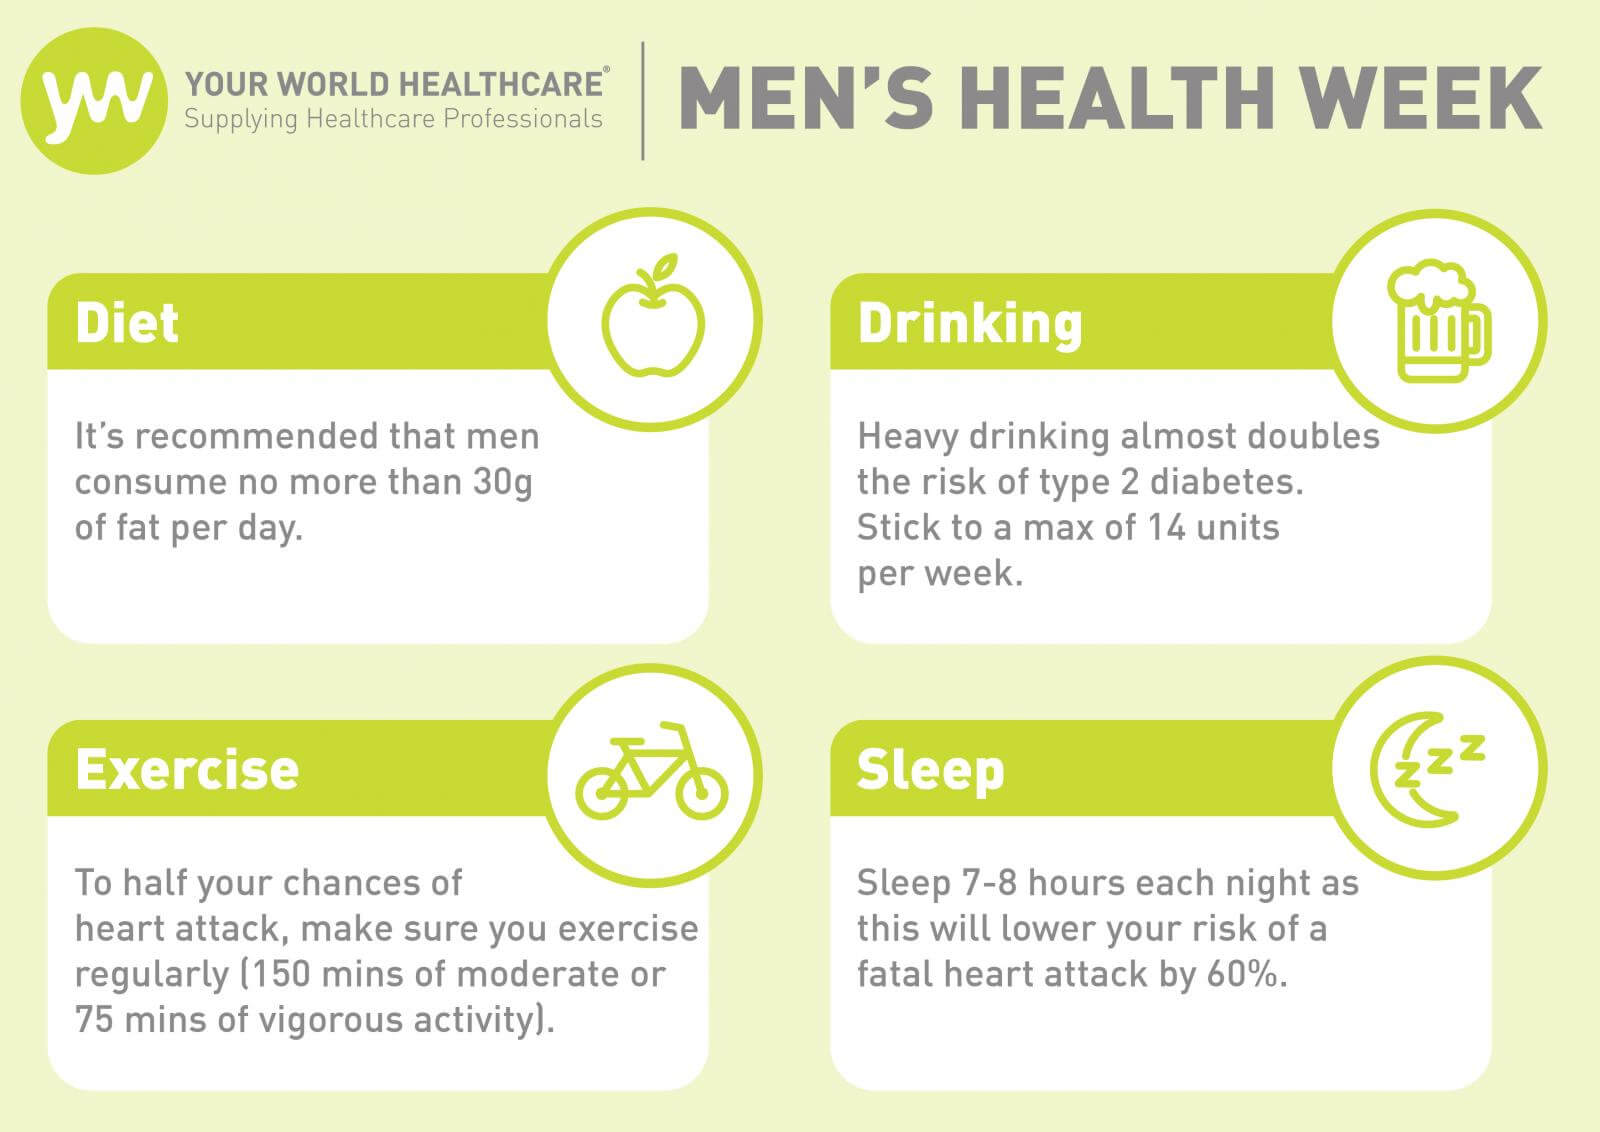 Men's Health Week statistics - how can men lose weight?